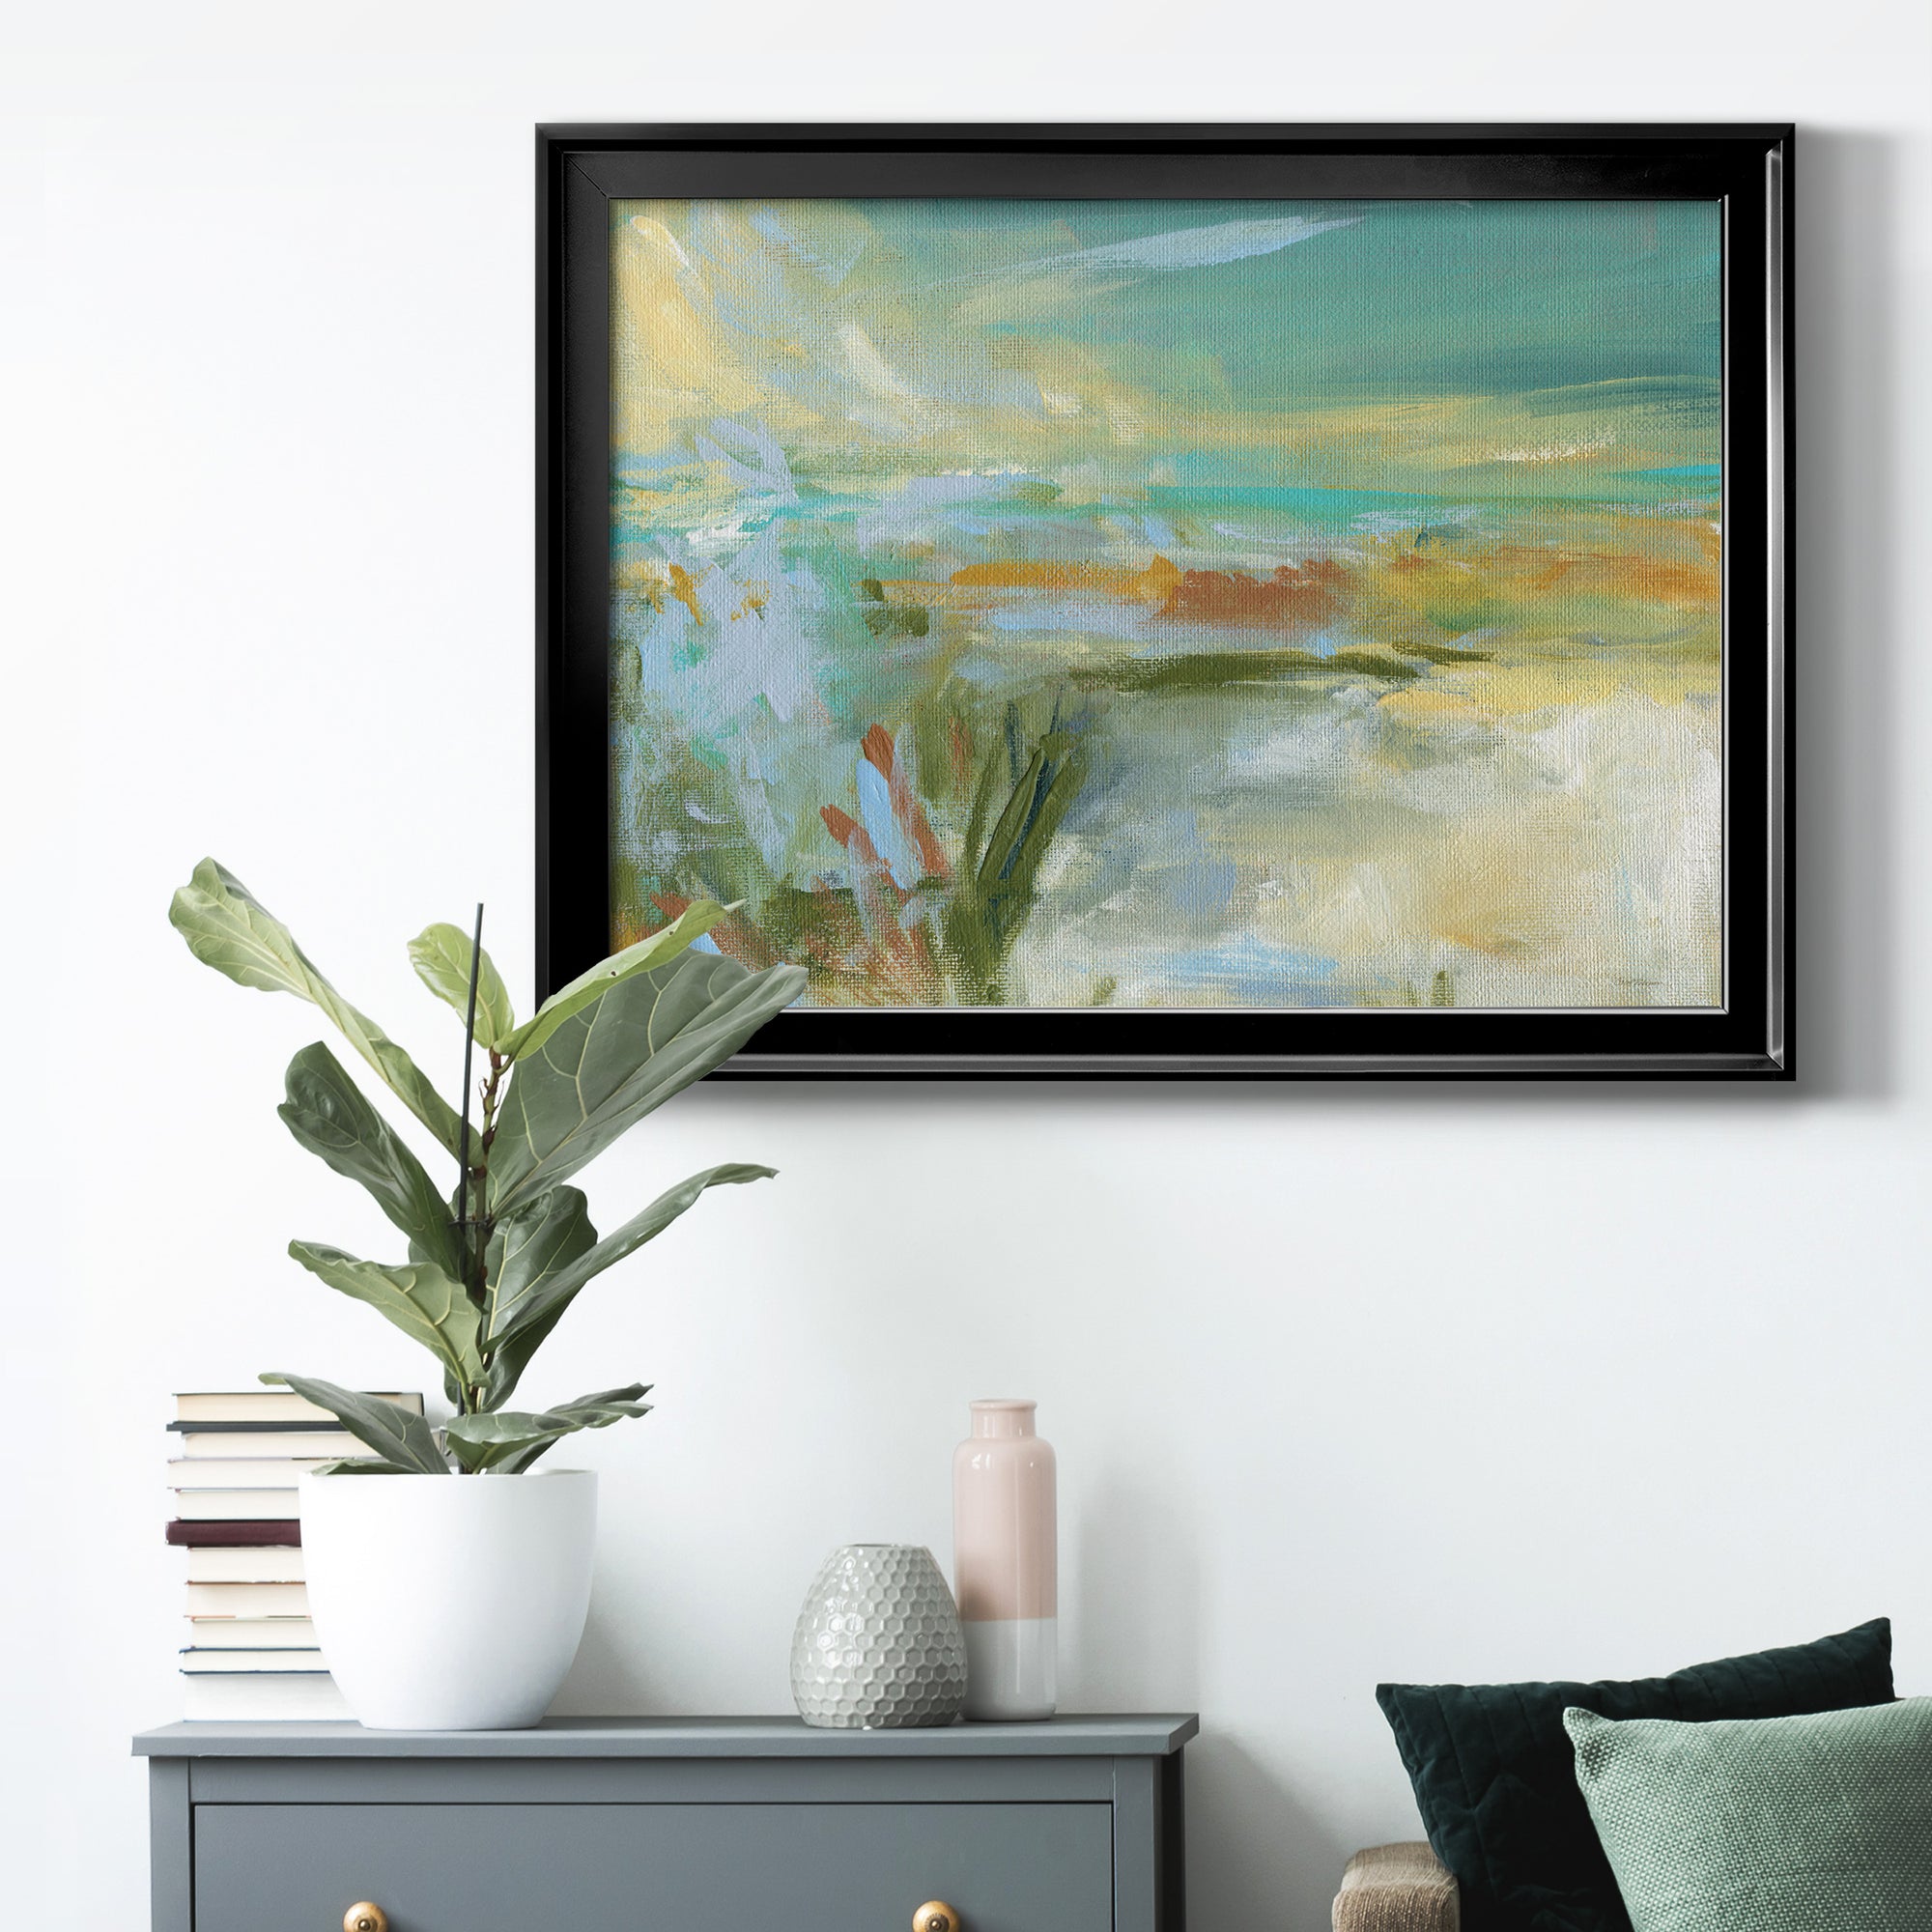 Sandy Beach Premium Classic Framed Canvas - Ready to Hang